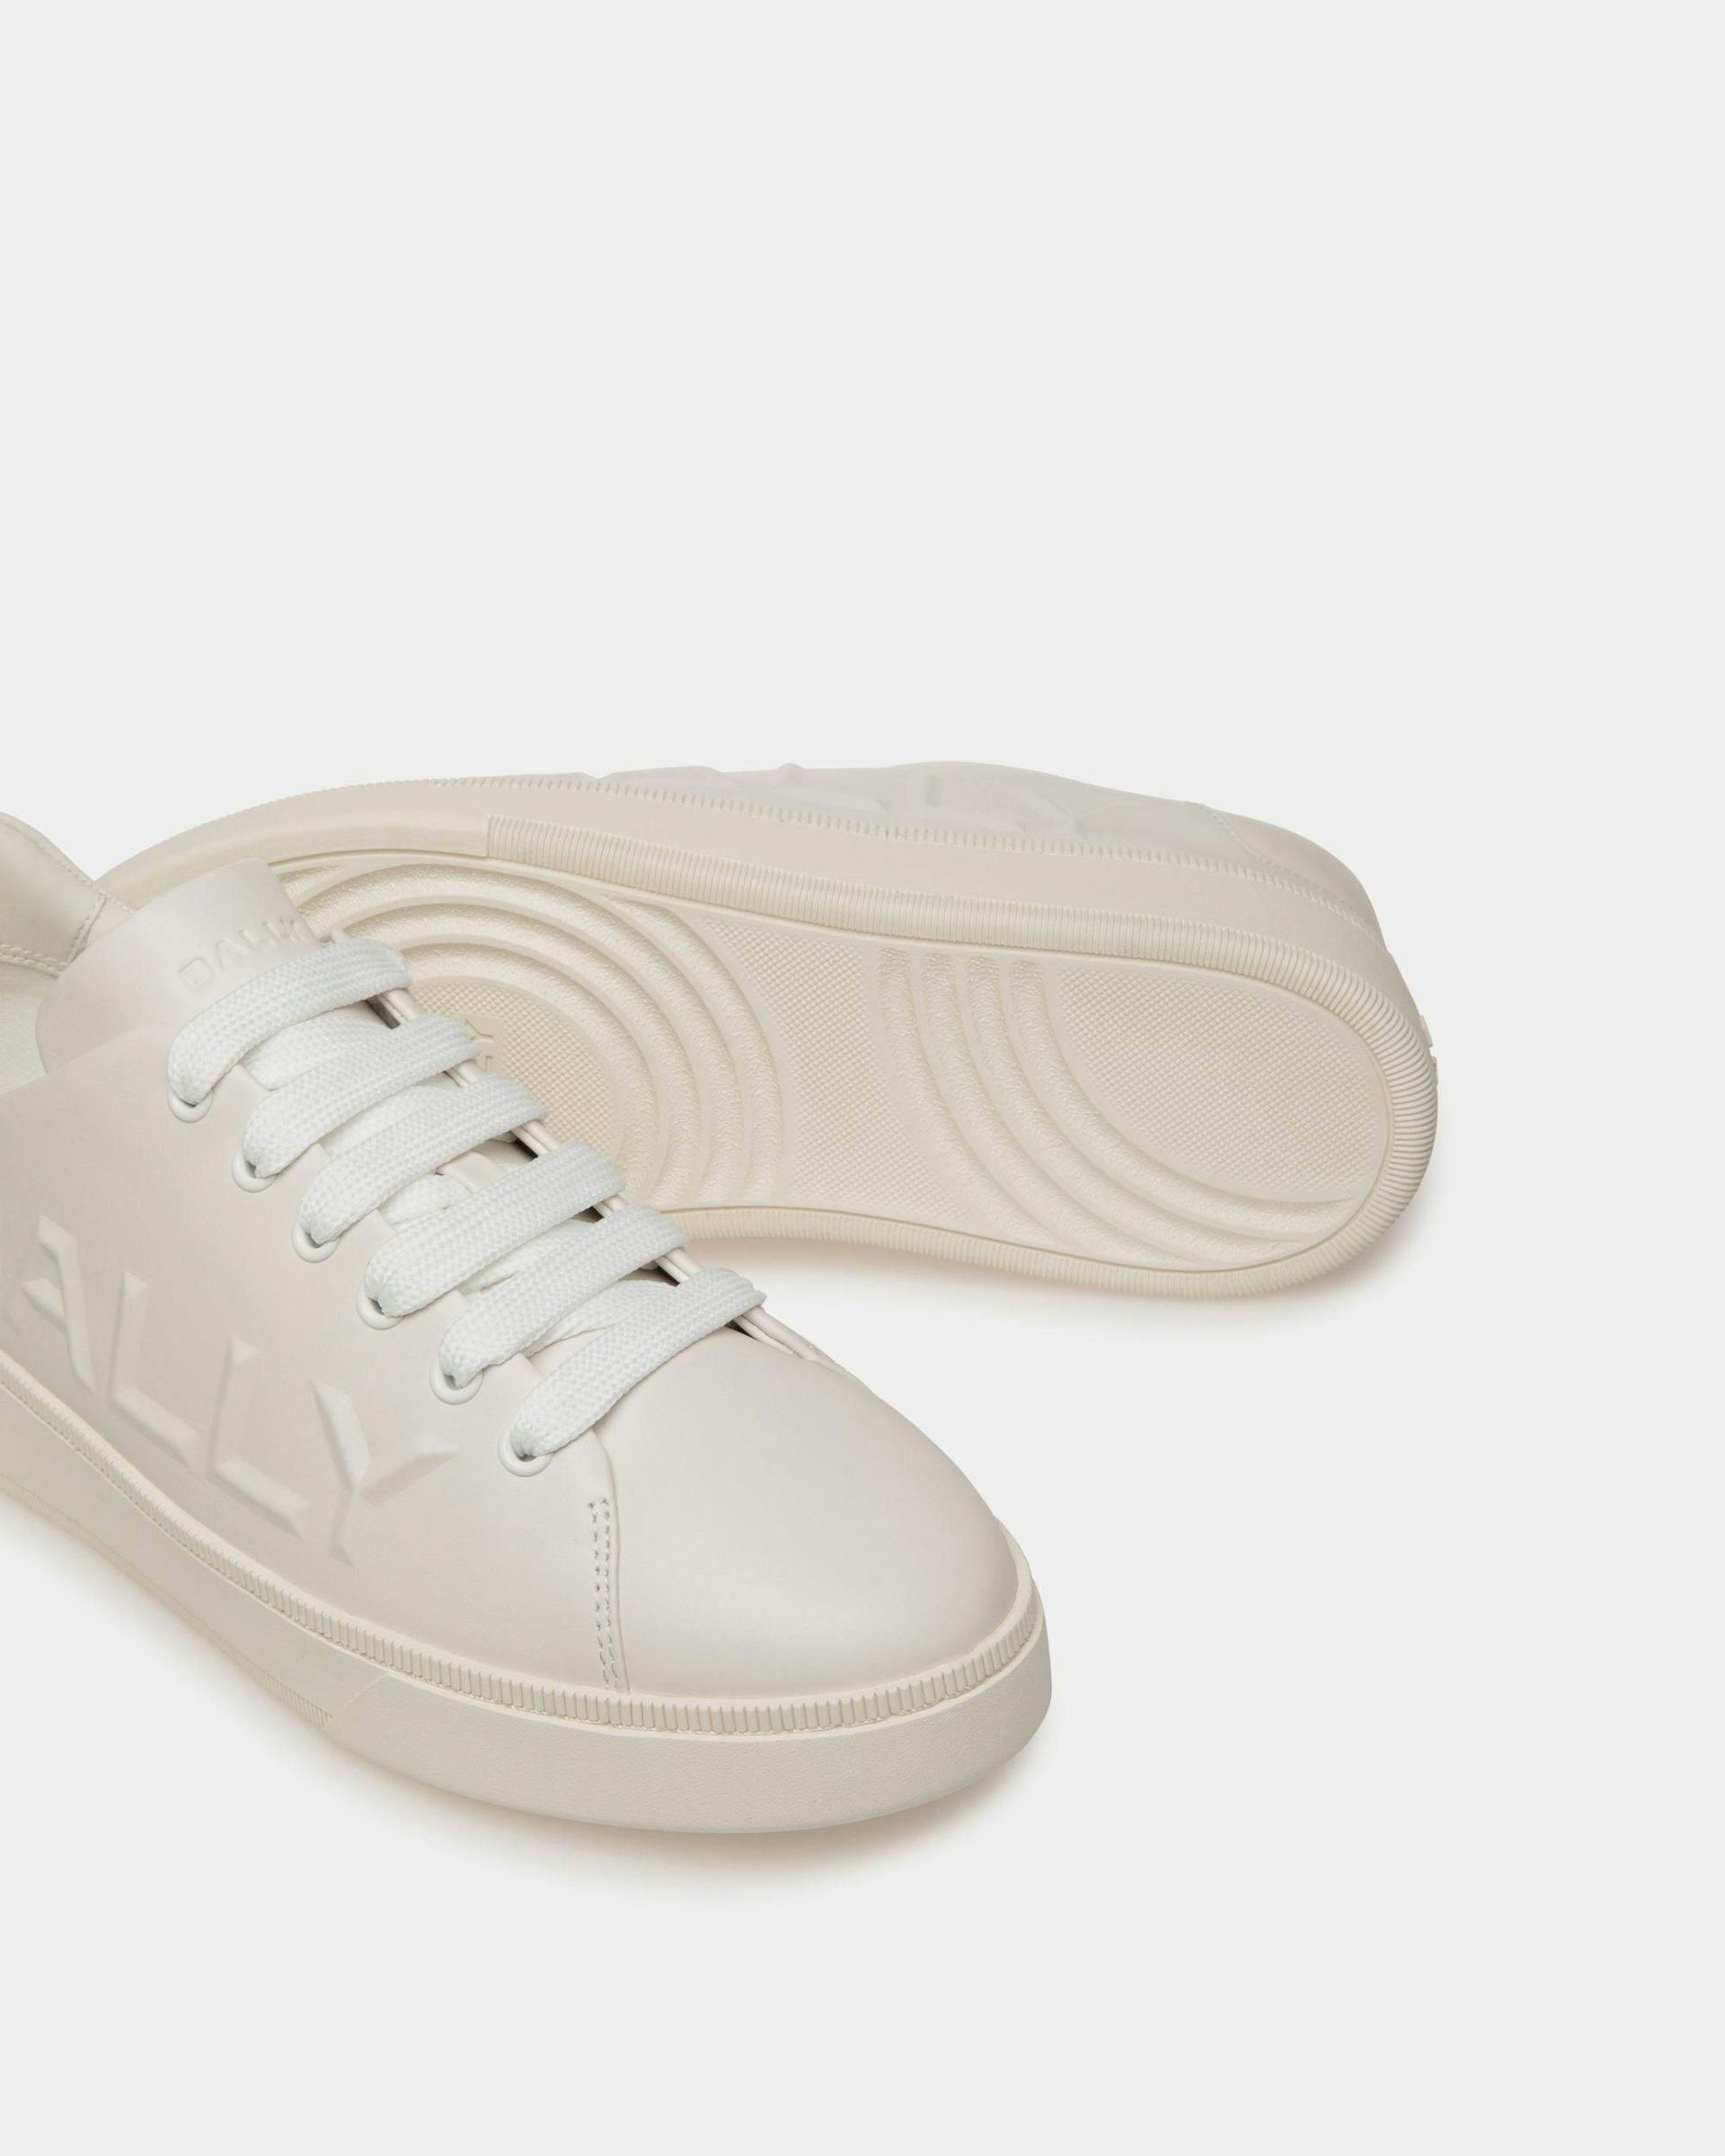 Men's Raise Sneaker in White Leather | Bally | Still Life Below